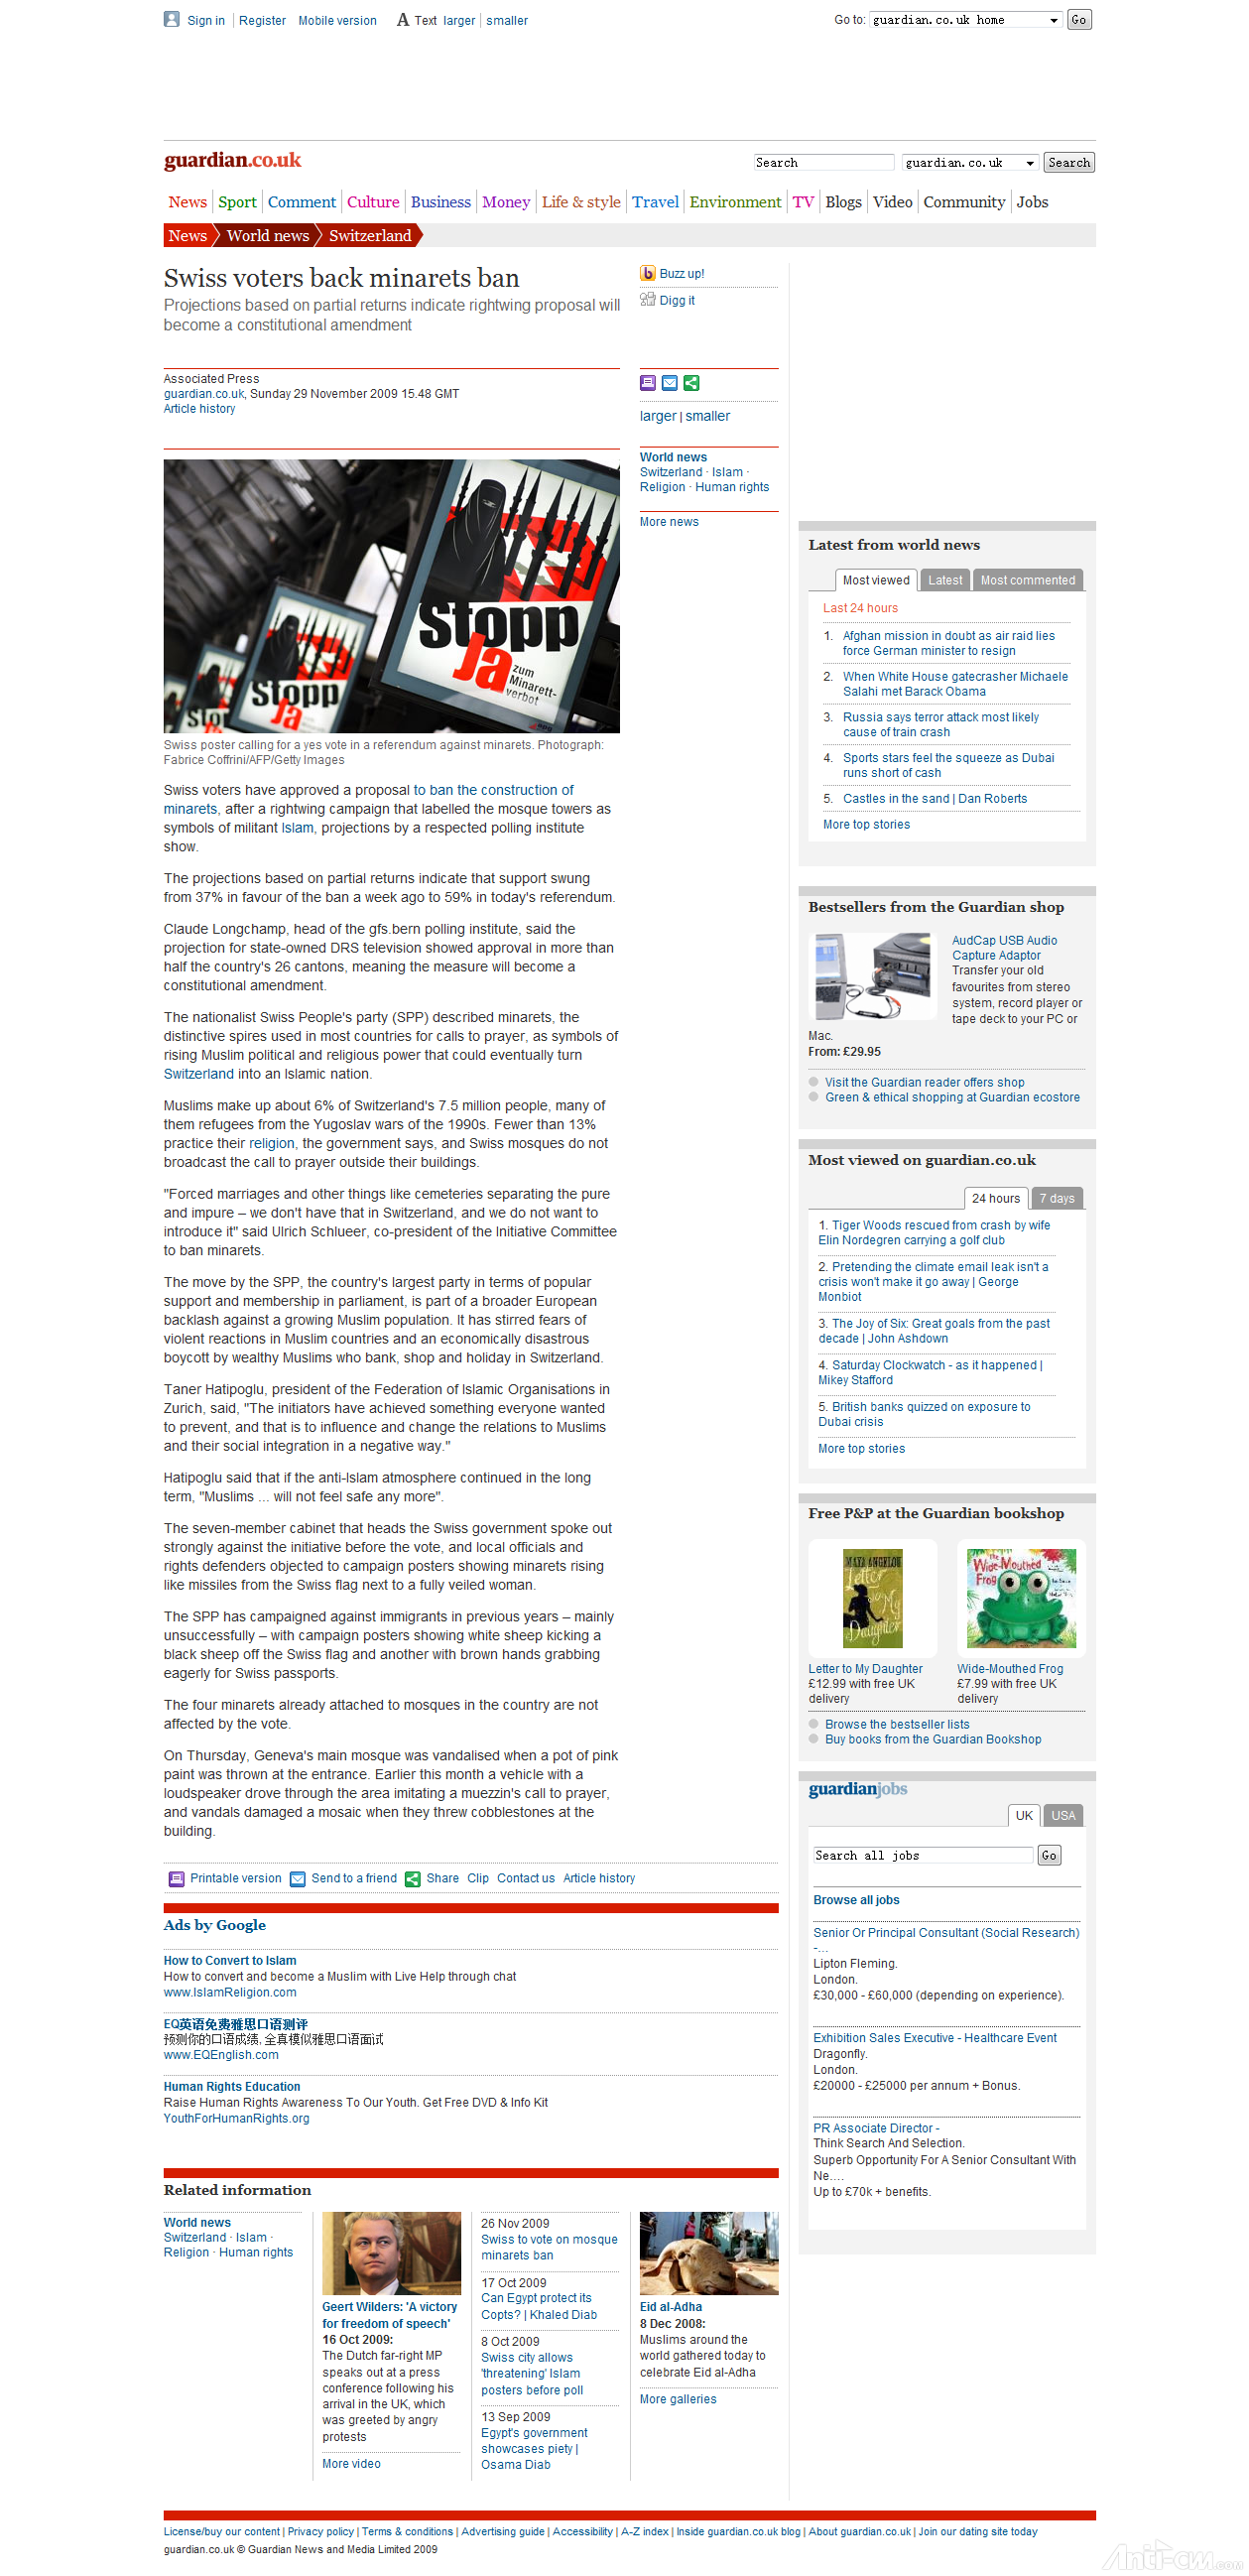 Swiss voters back minarets ban  World news  guardian.co.uk.png